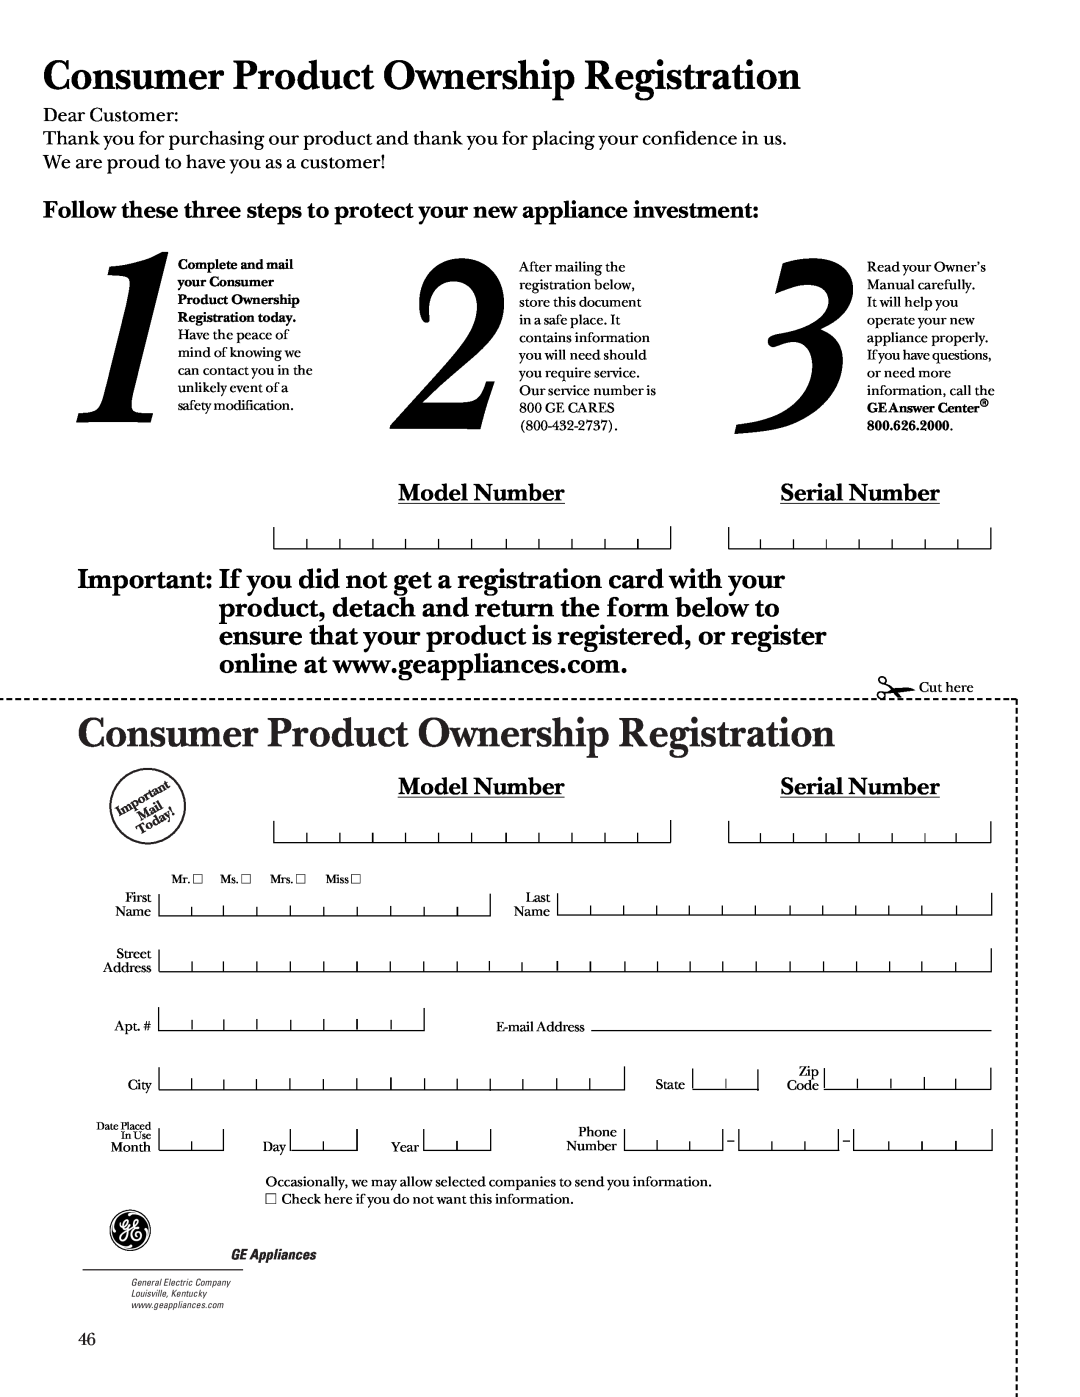 GE SCA 2000, SCA 2001 owner manual Model Number, Serial Number, Consumer Product Ownership Registration, GE Appliances 